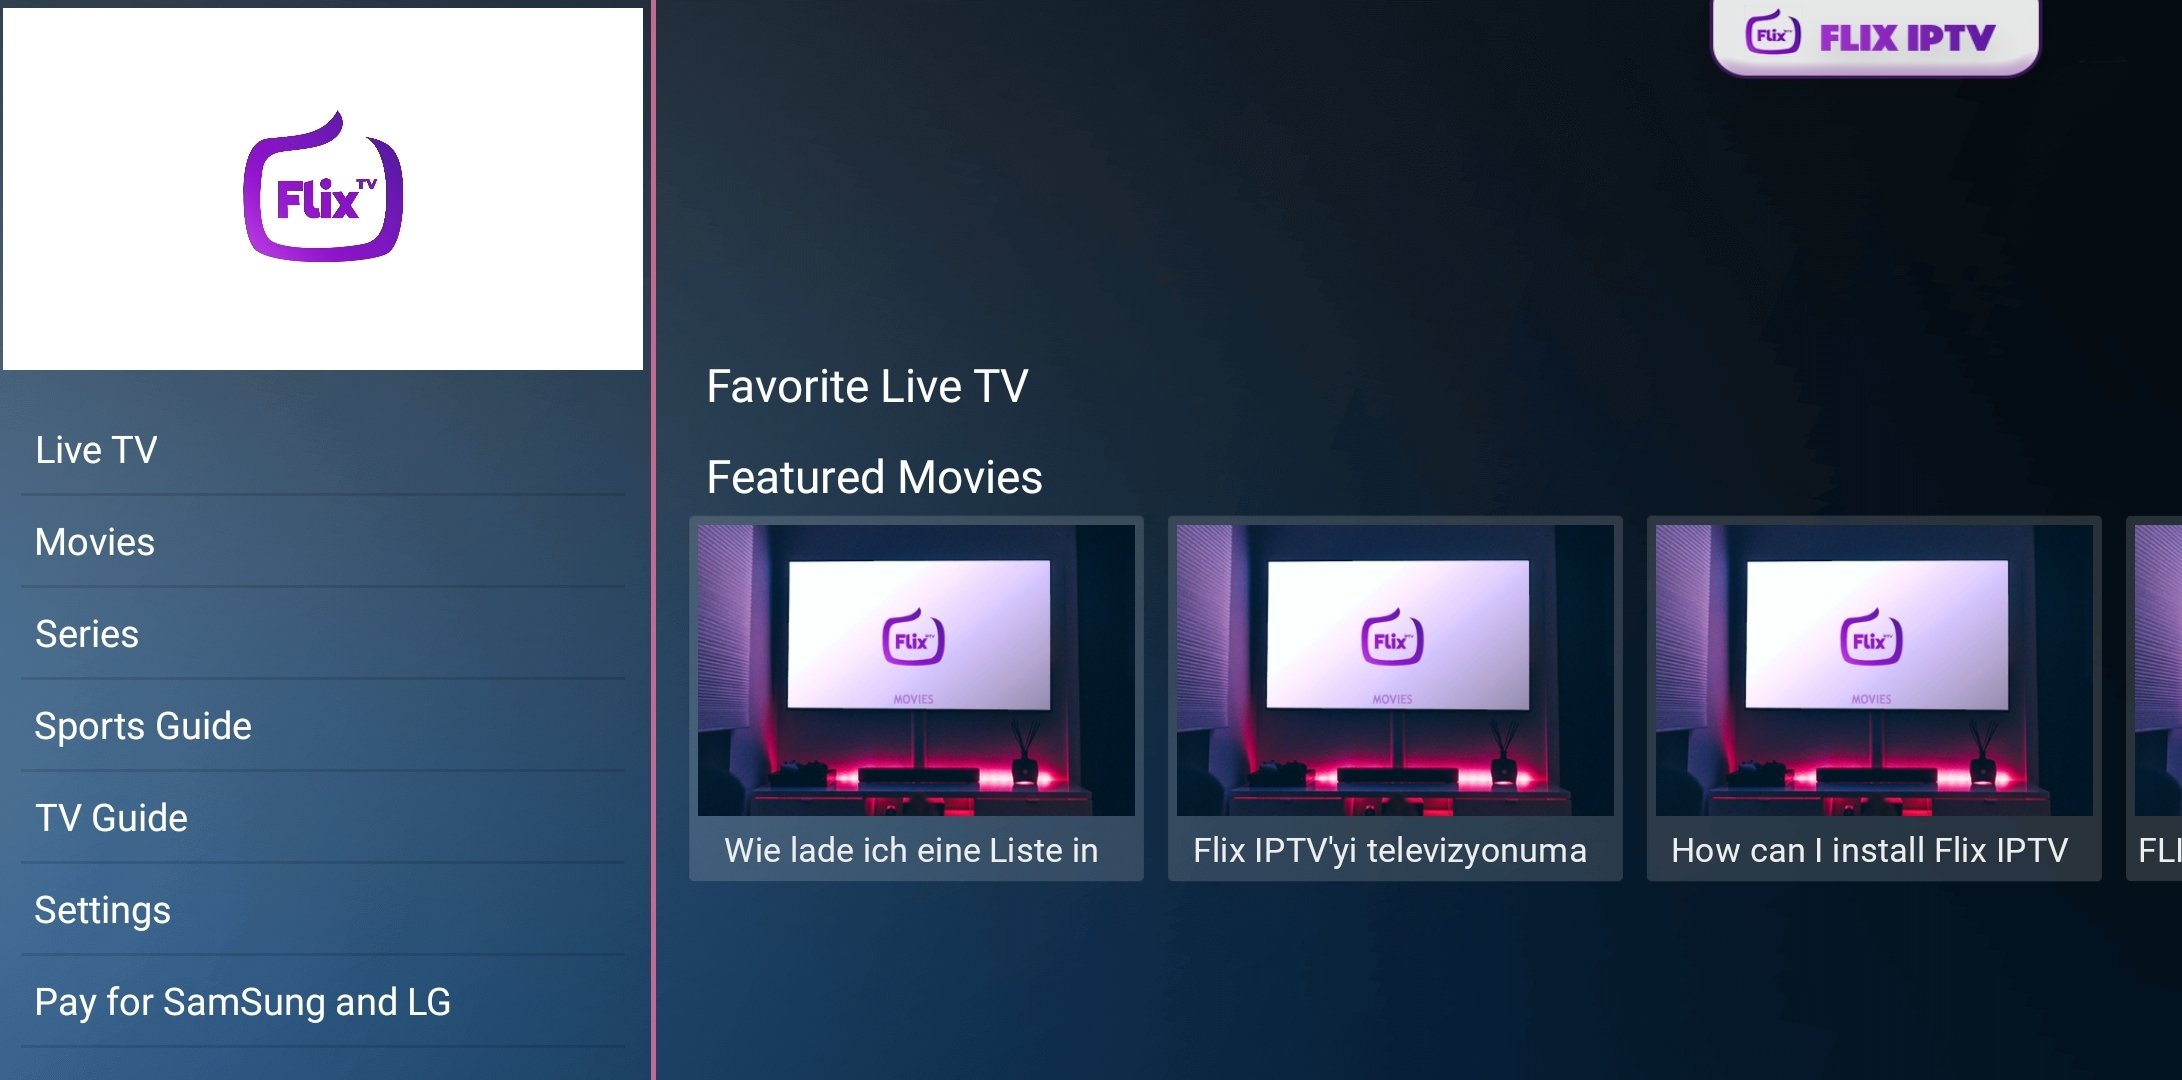 ITTV - Plus AndroidTV APK للاندرويد تنزيل